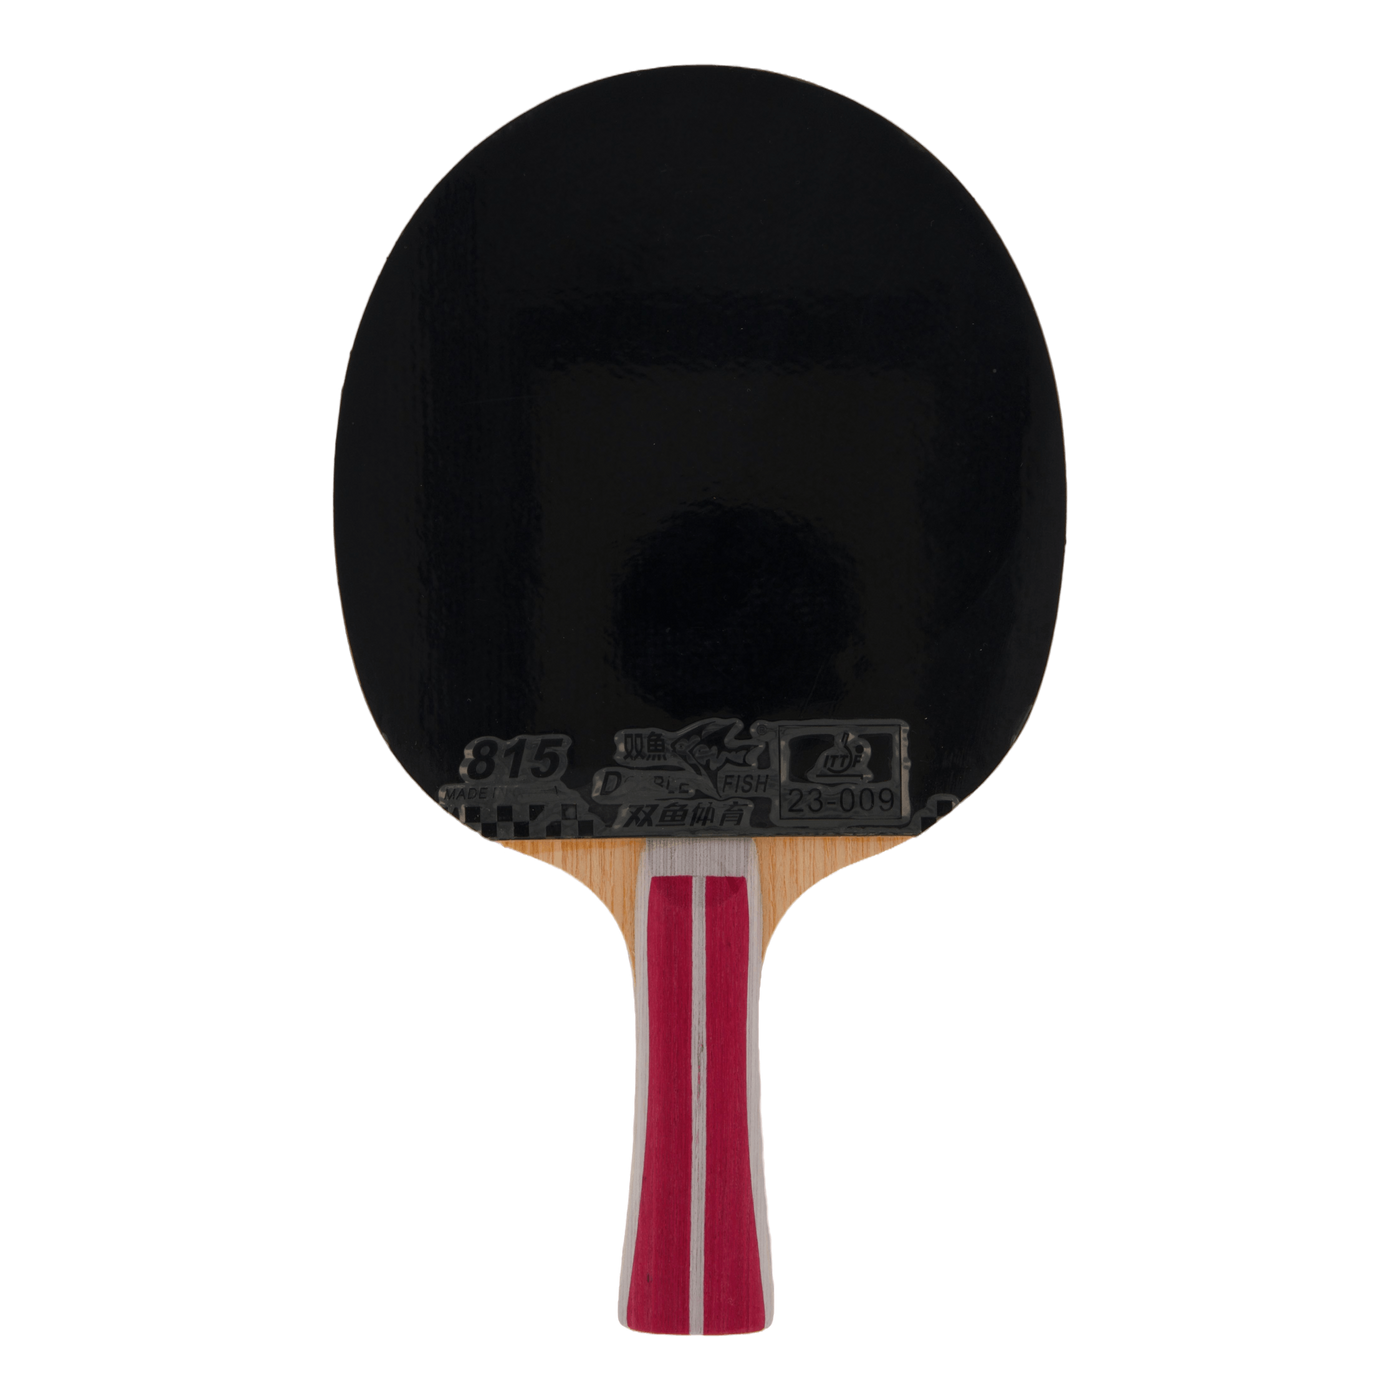 2a+ Table Tennis Racket